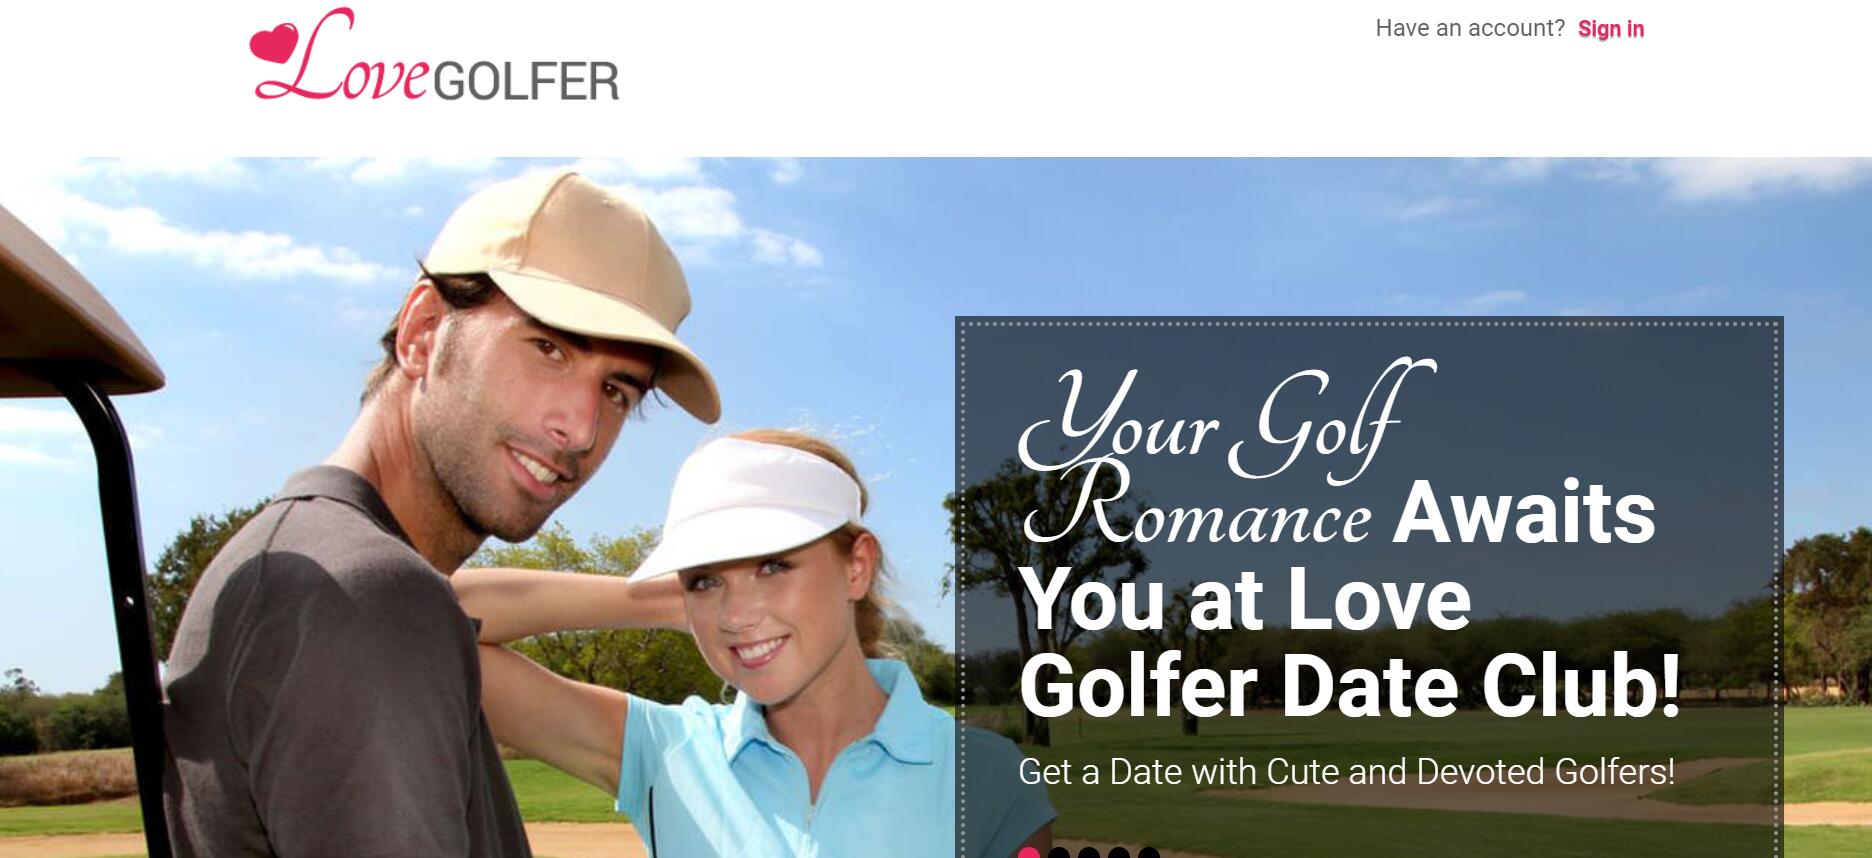 Love Golfer Review Find Golf Romance Online